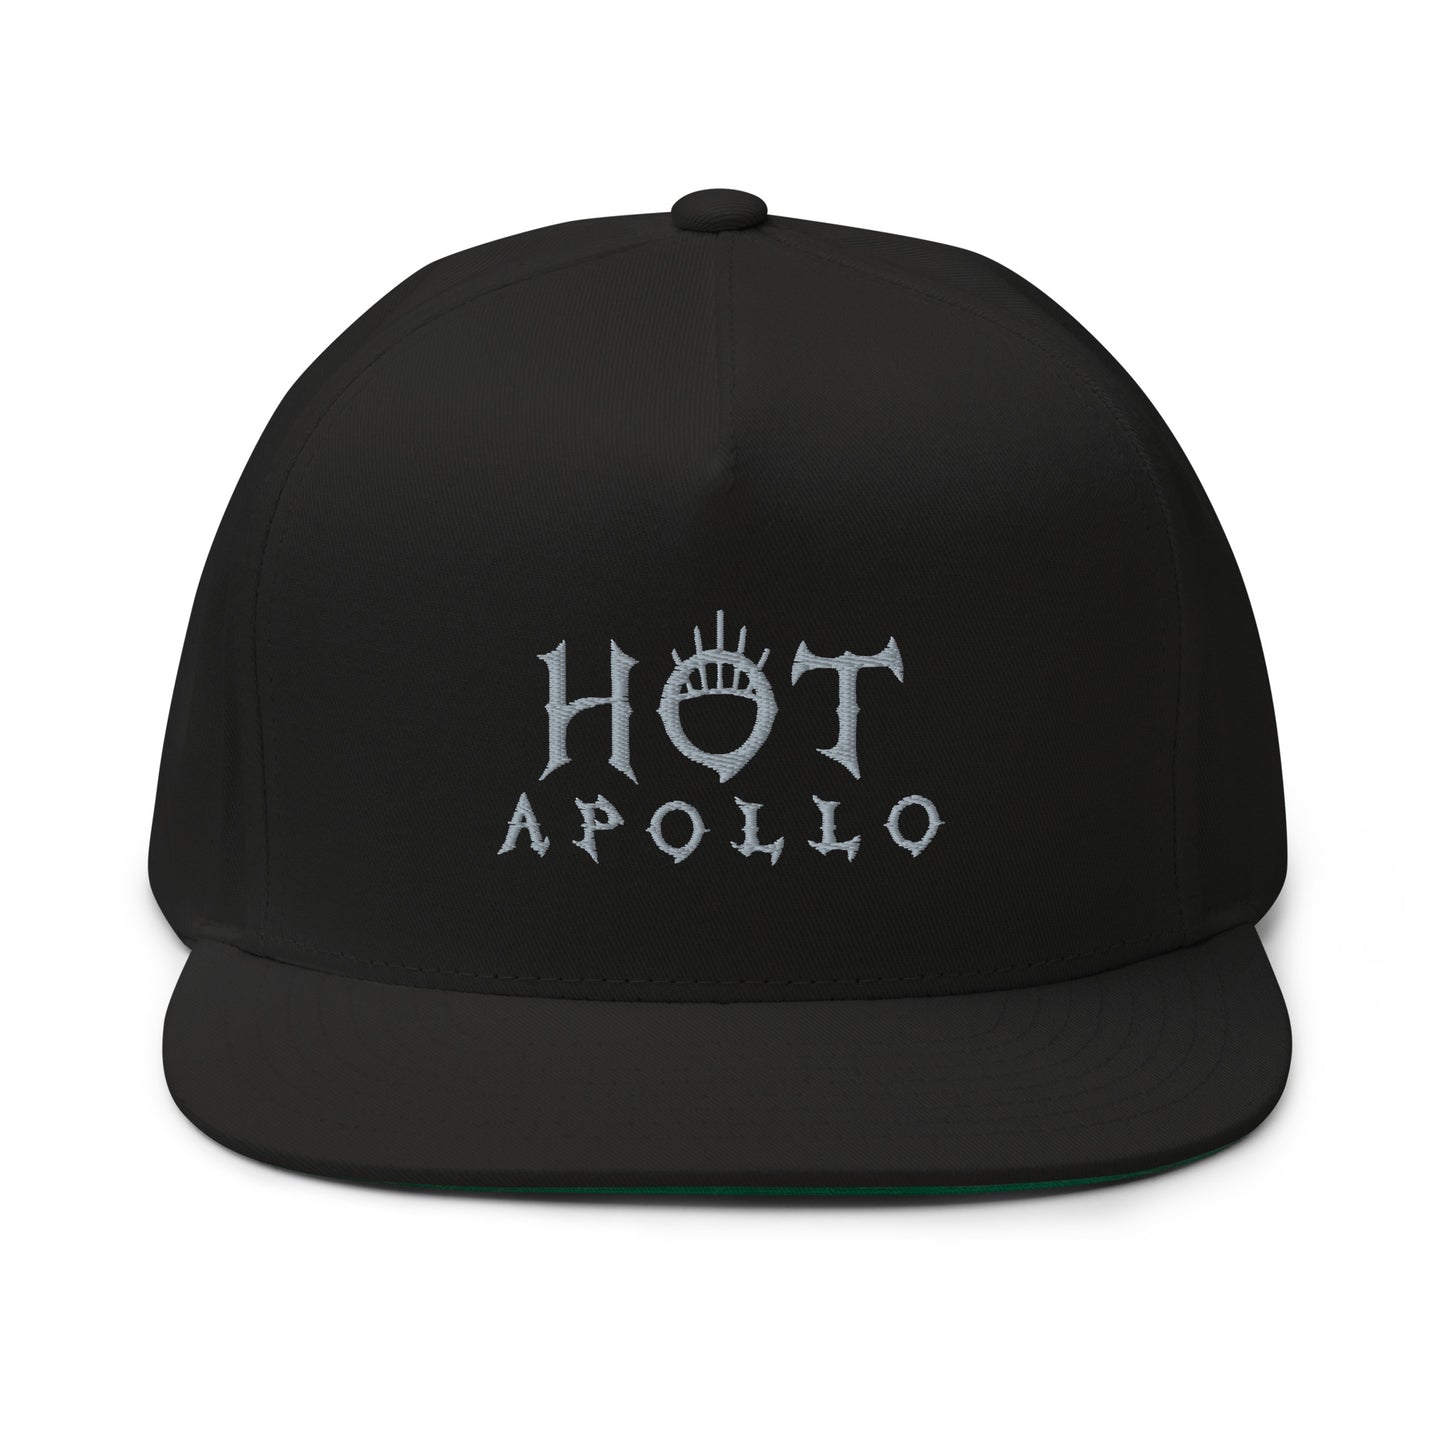 Hot Apollo Flat Bill Cap